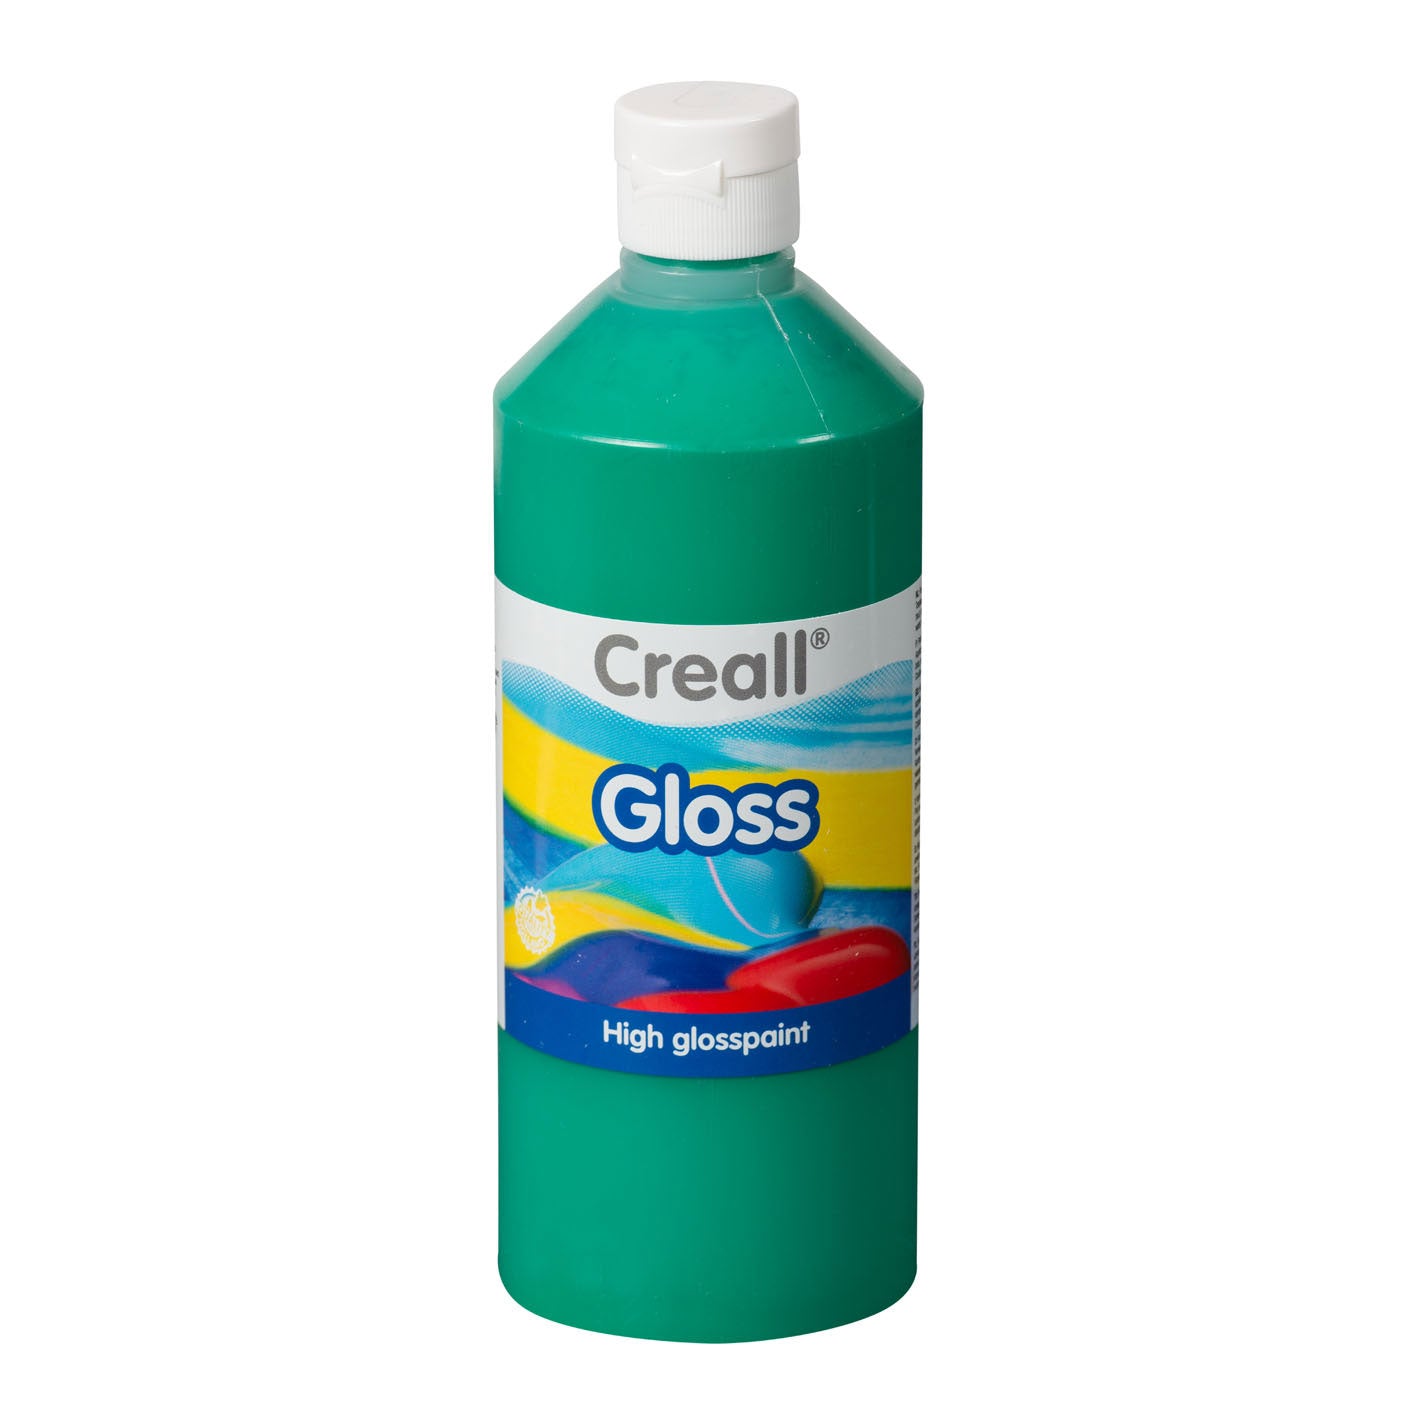 Creall Gloss Gloss Paint Verde, 500 ml